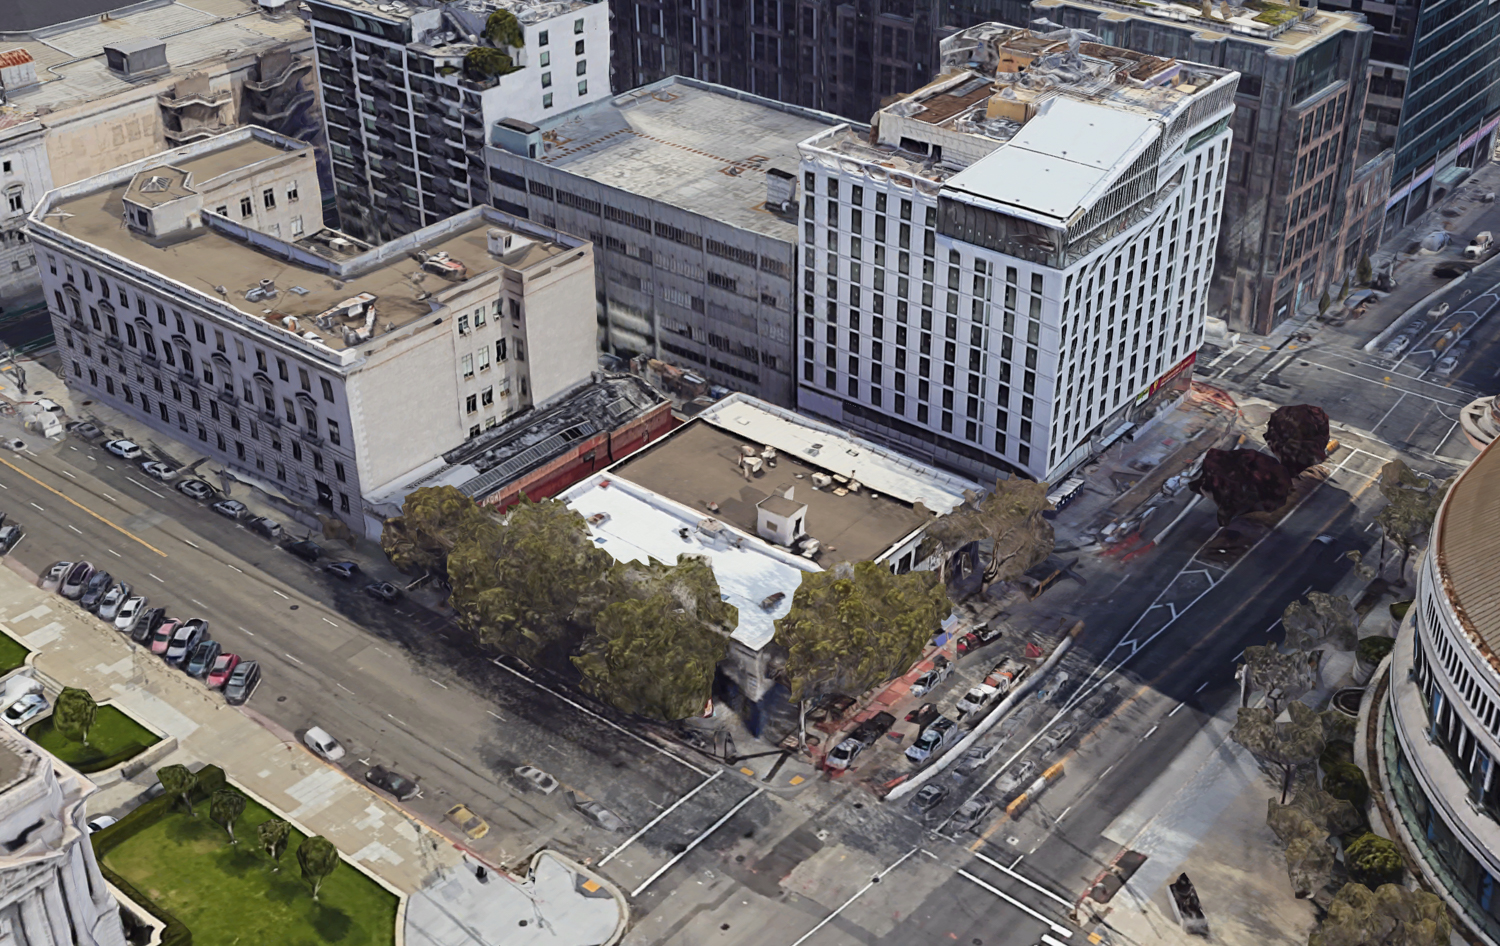 155 Grove Street, 234 Van Ness, and 240 Van Ness beside 200 Van Ness and the San Francisco Department of Public Health building, image via Google Satellite